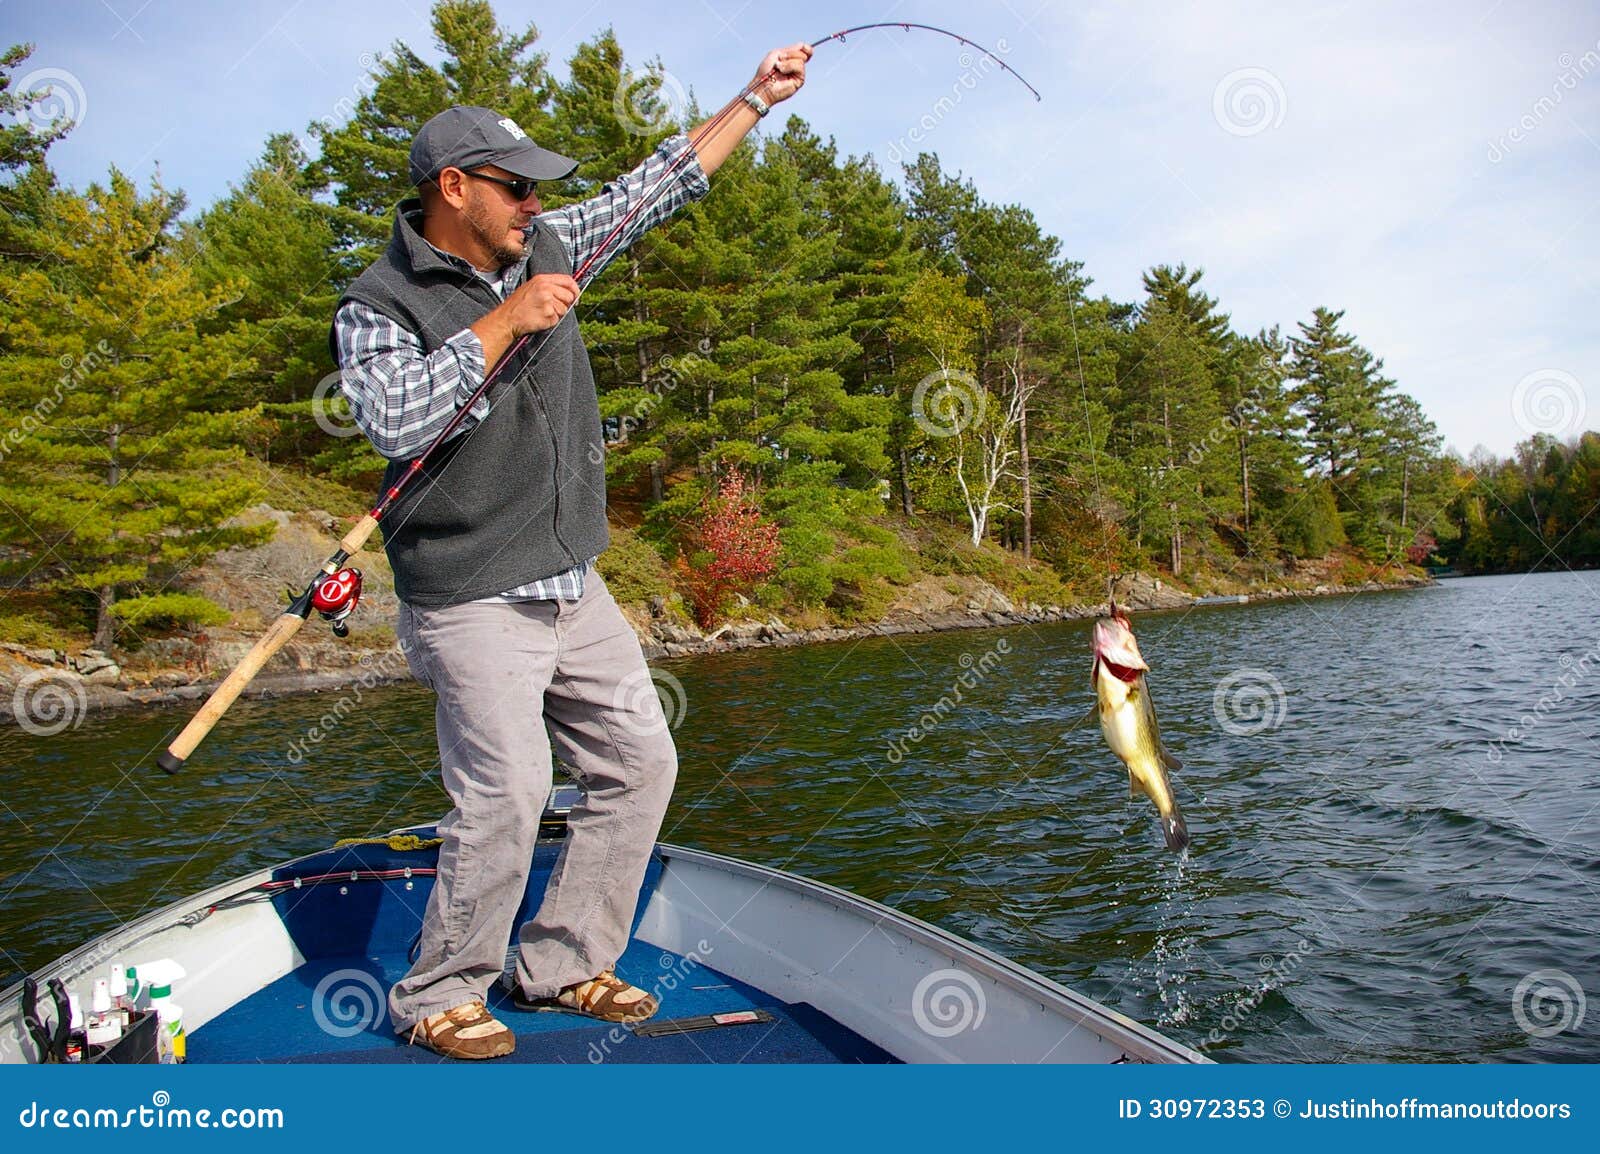 largemouth bass fishing